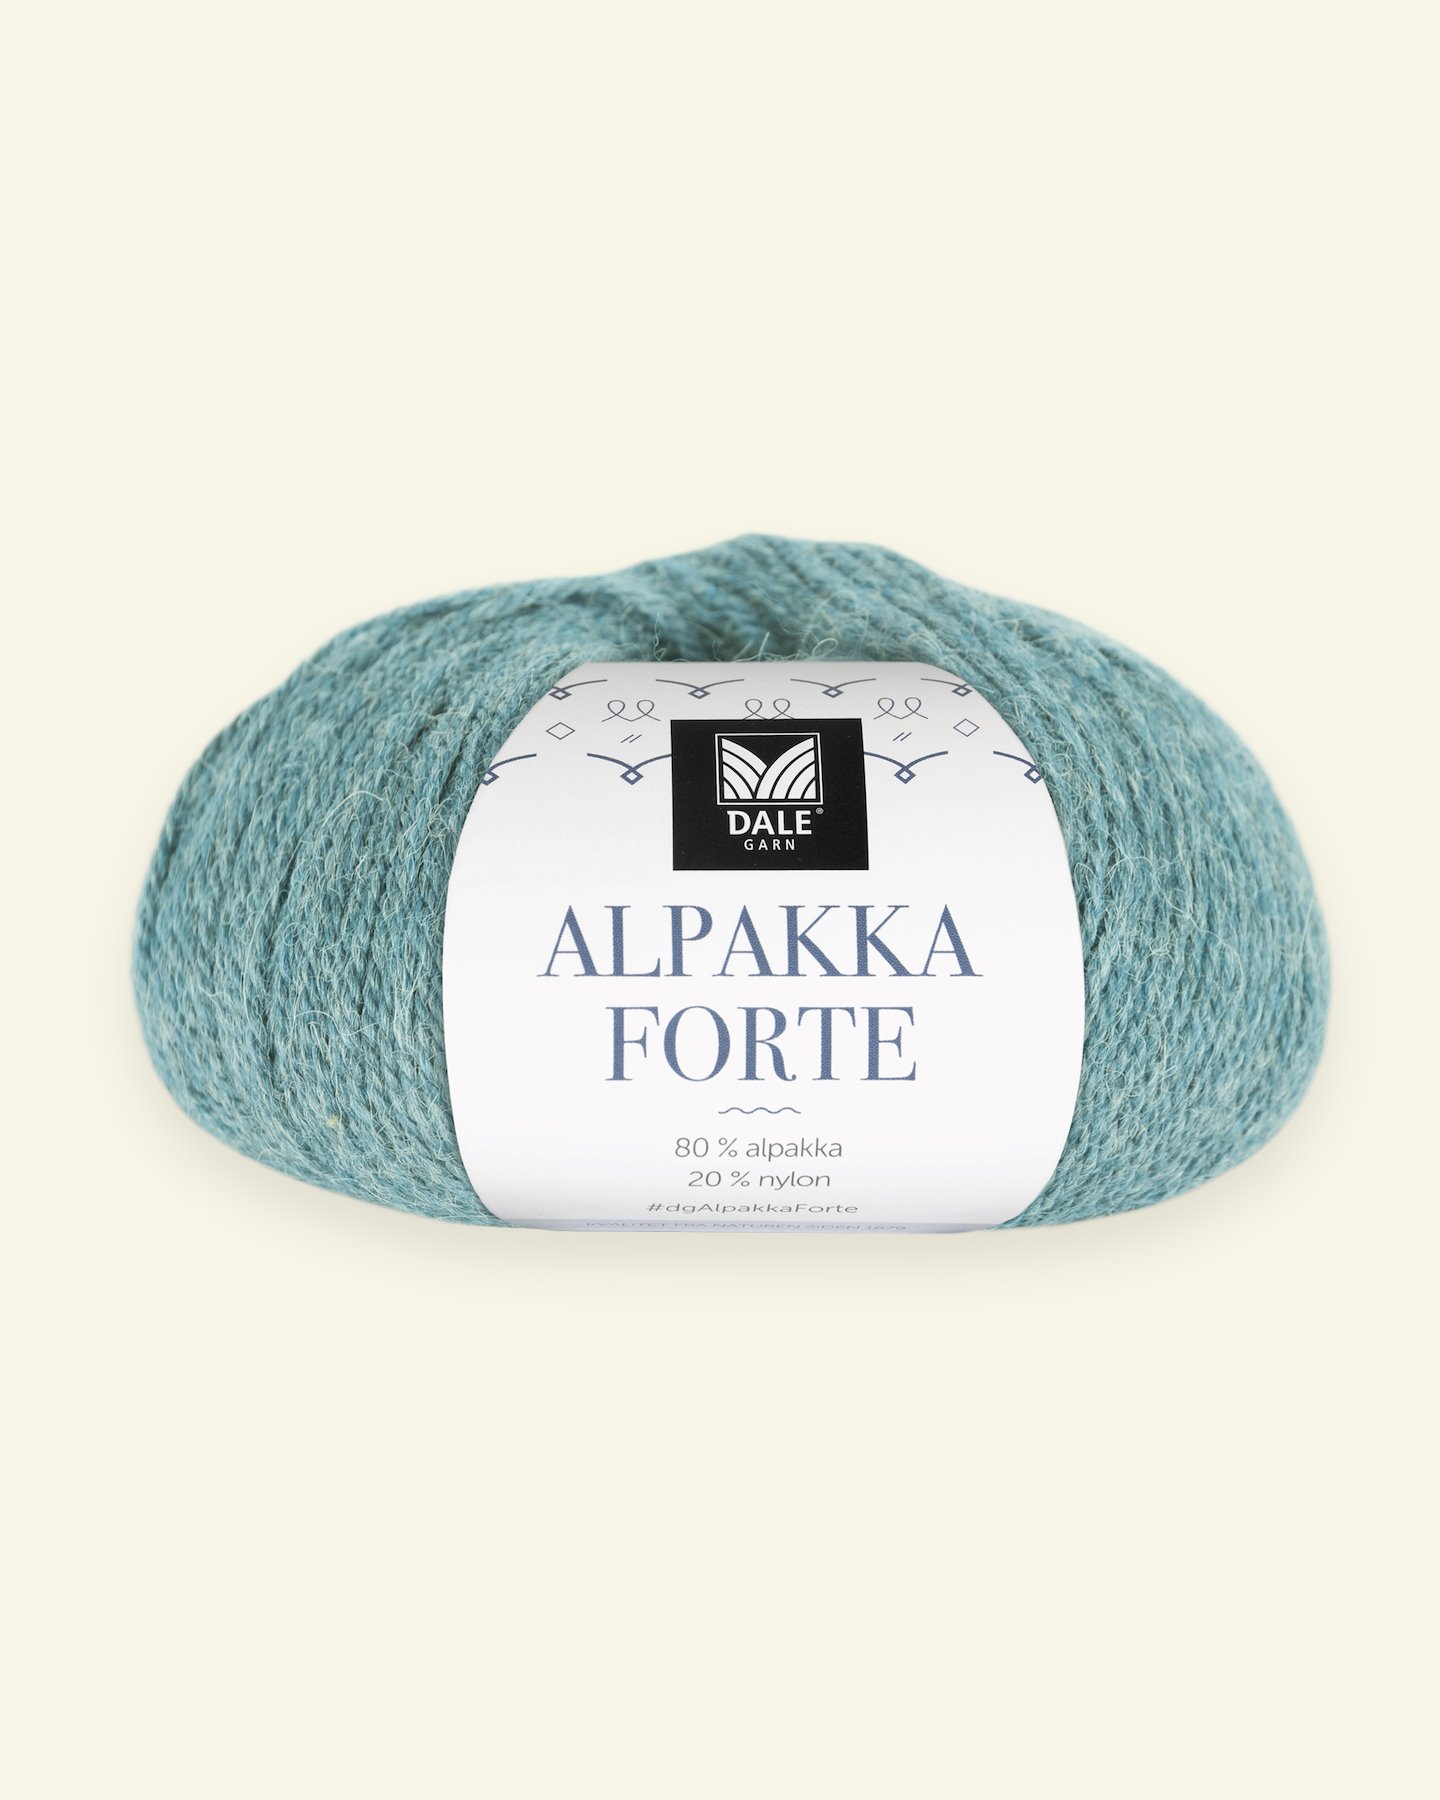 Dale Garn, alpackagarn "Alpakka Forte", aqua mel. (713) 90000446_pack